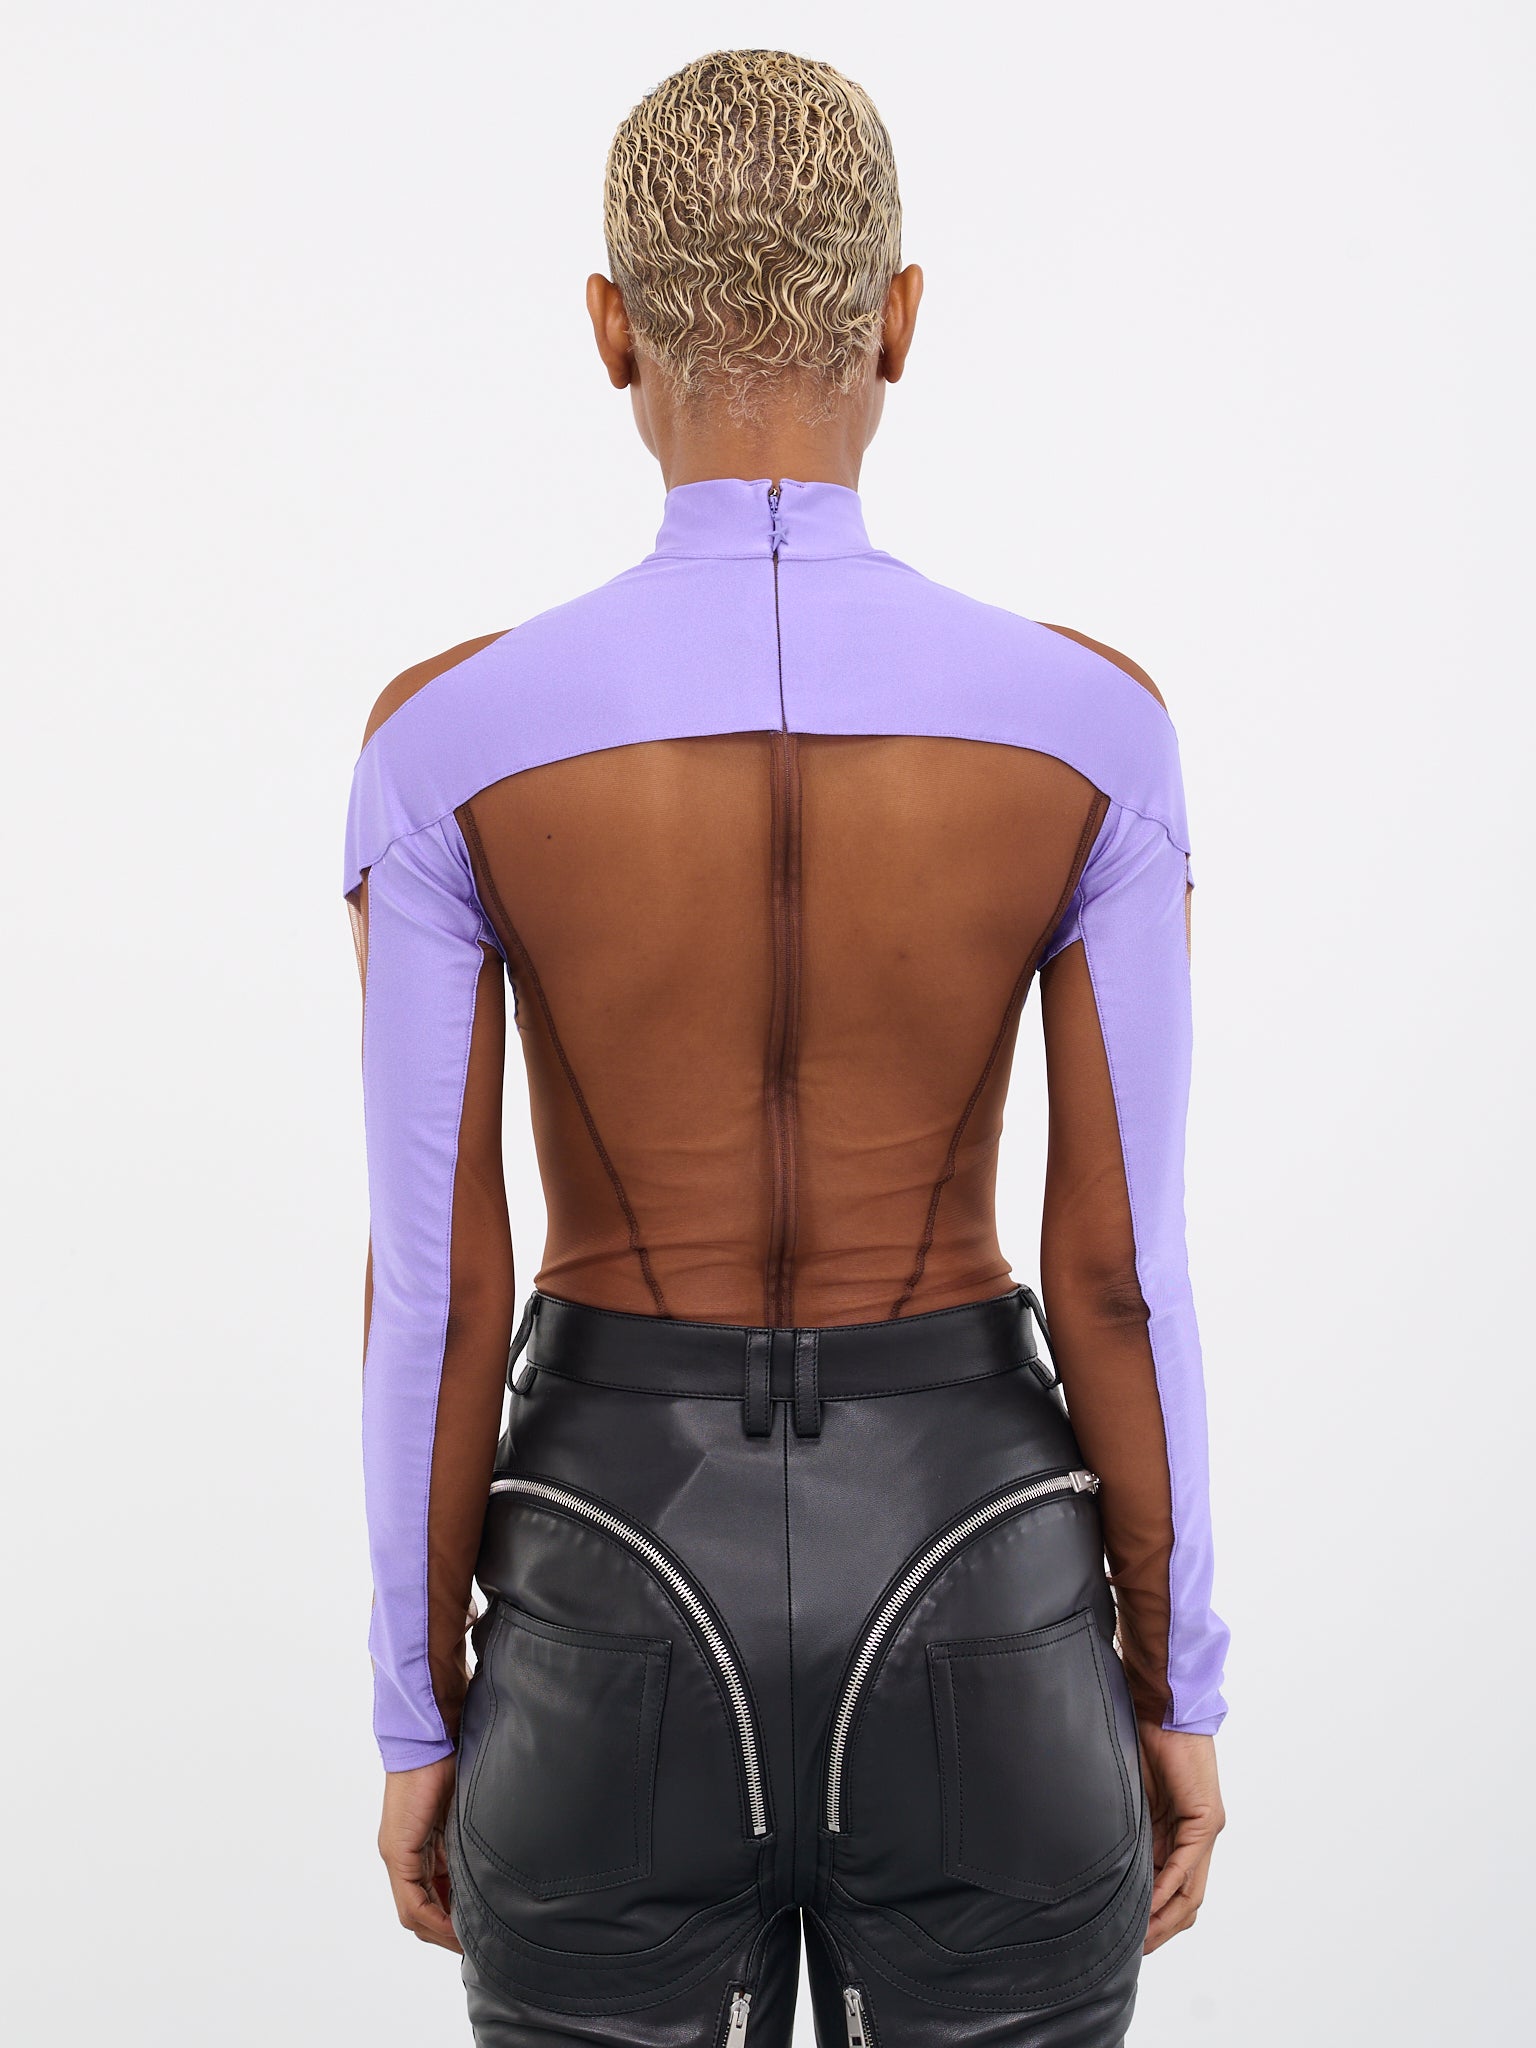 Mugler Illusion Stretch Bodysuit in Lilac & Nude 02